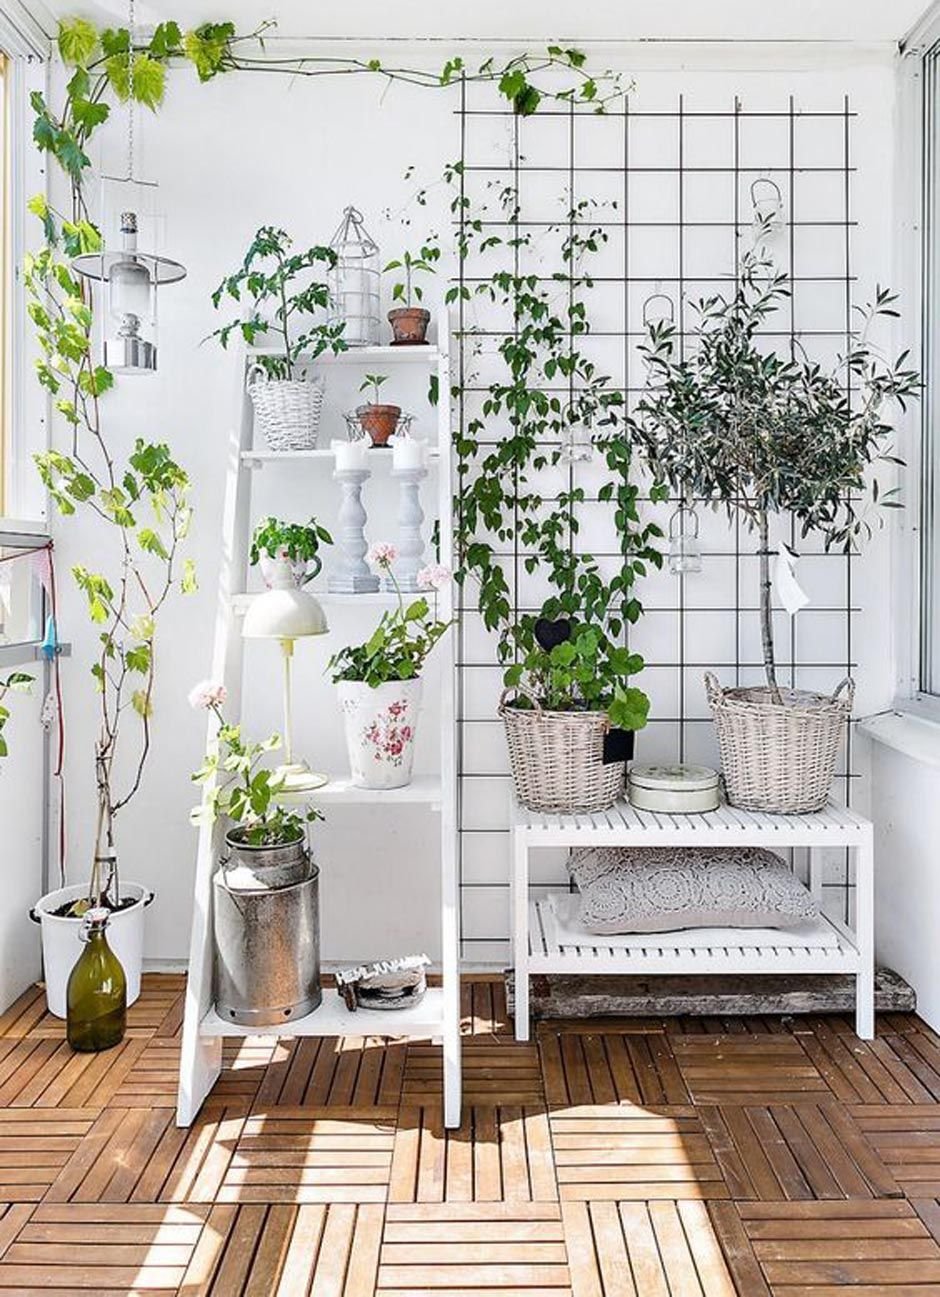 Study room with plants